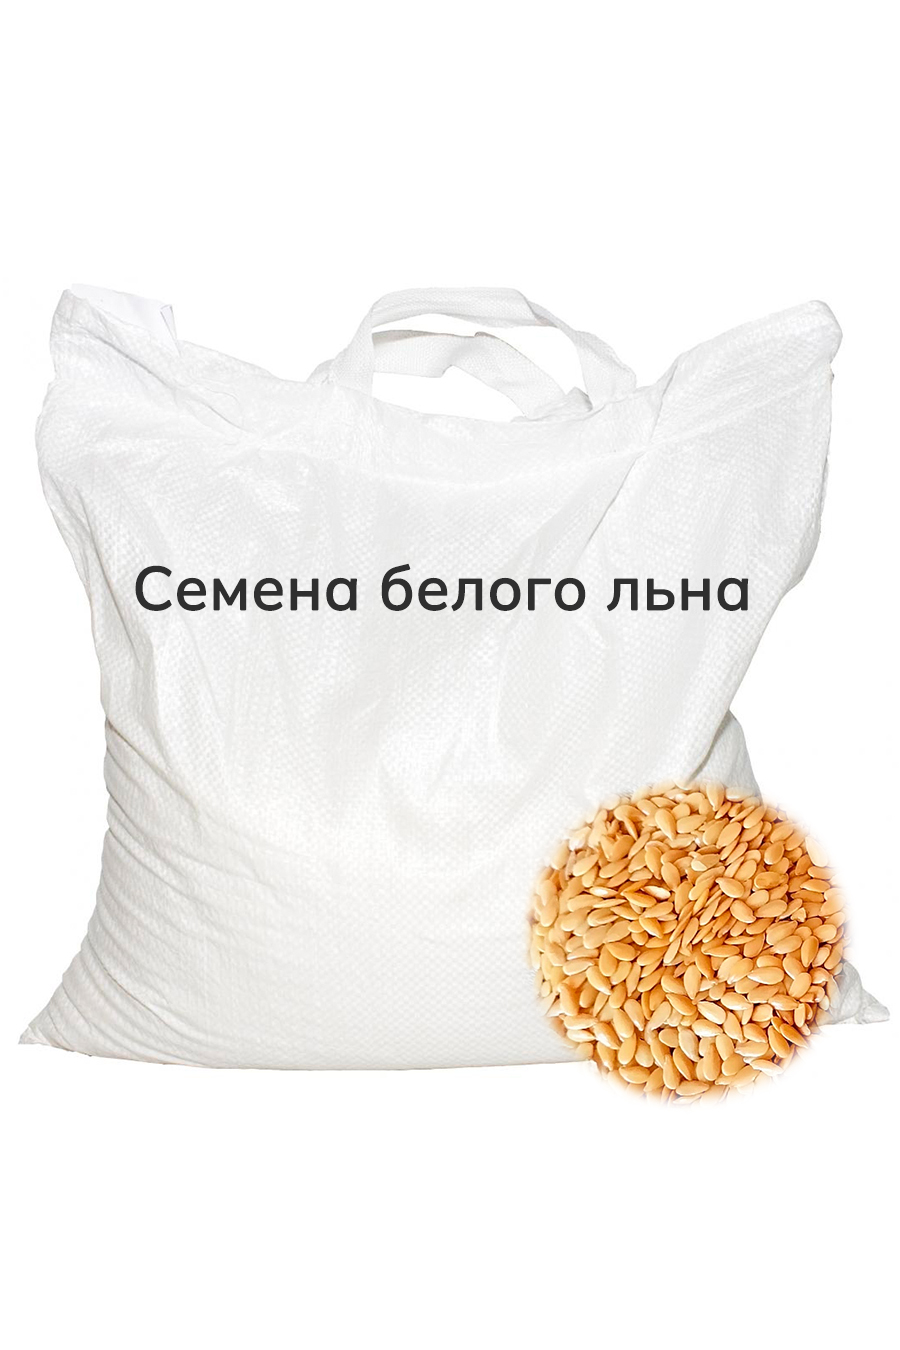 Семена белого льна Василева Слобода 5 кг